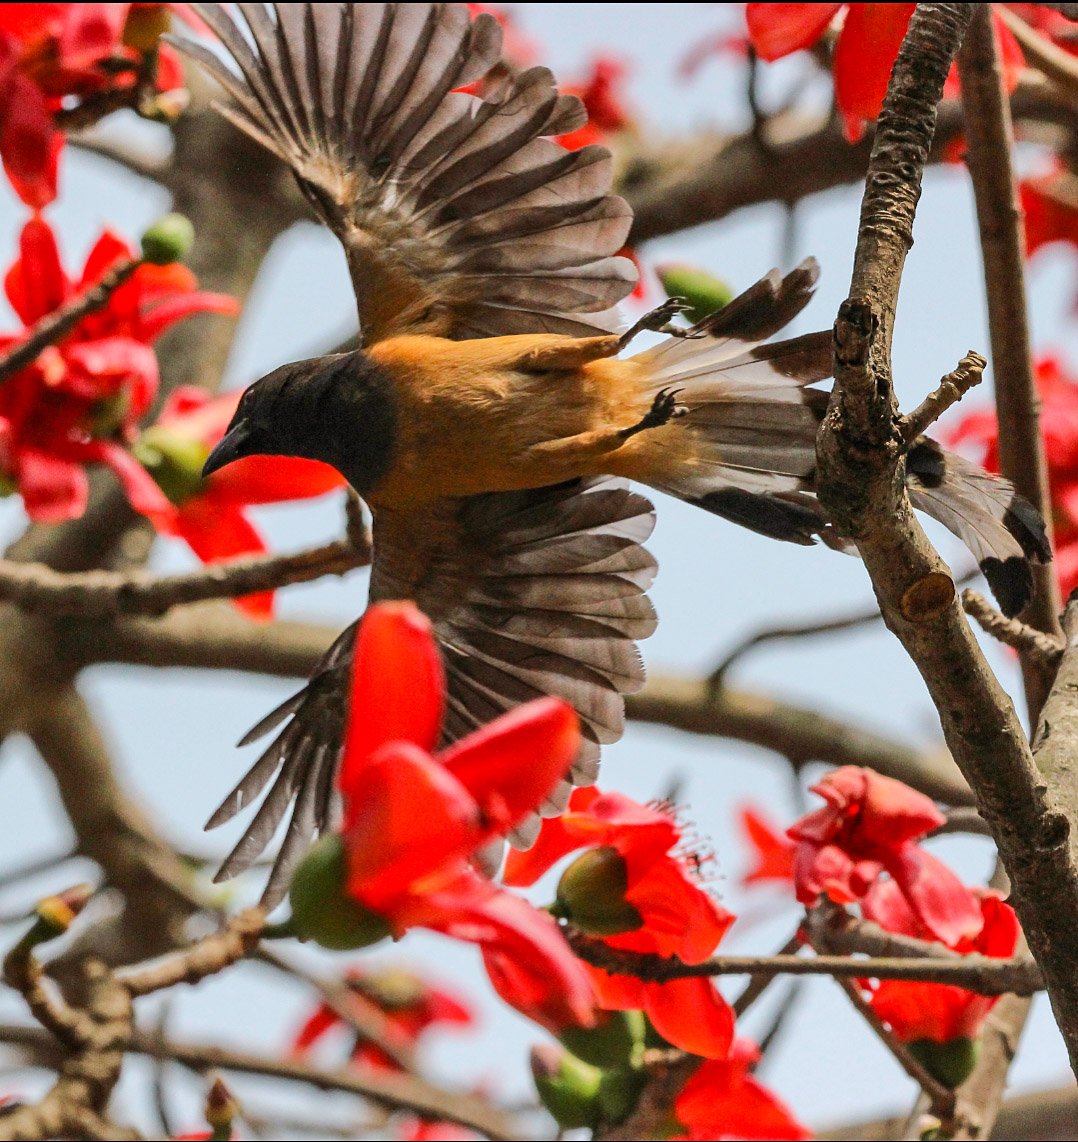 #rufoustreepie 
@NaturewatchTH @birdcountindia @IndianBirdPics @Team_eBird @Avibase @orientbirdclub @BBCEarth @natgeowild @_everybird_ @